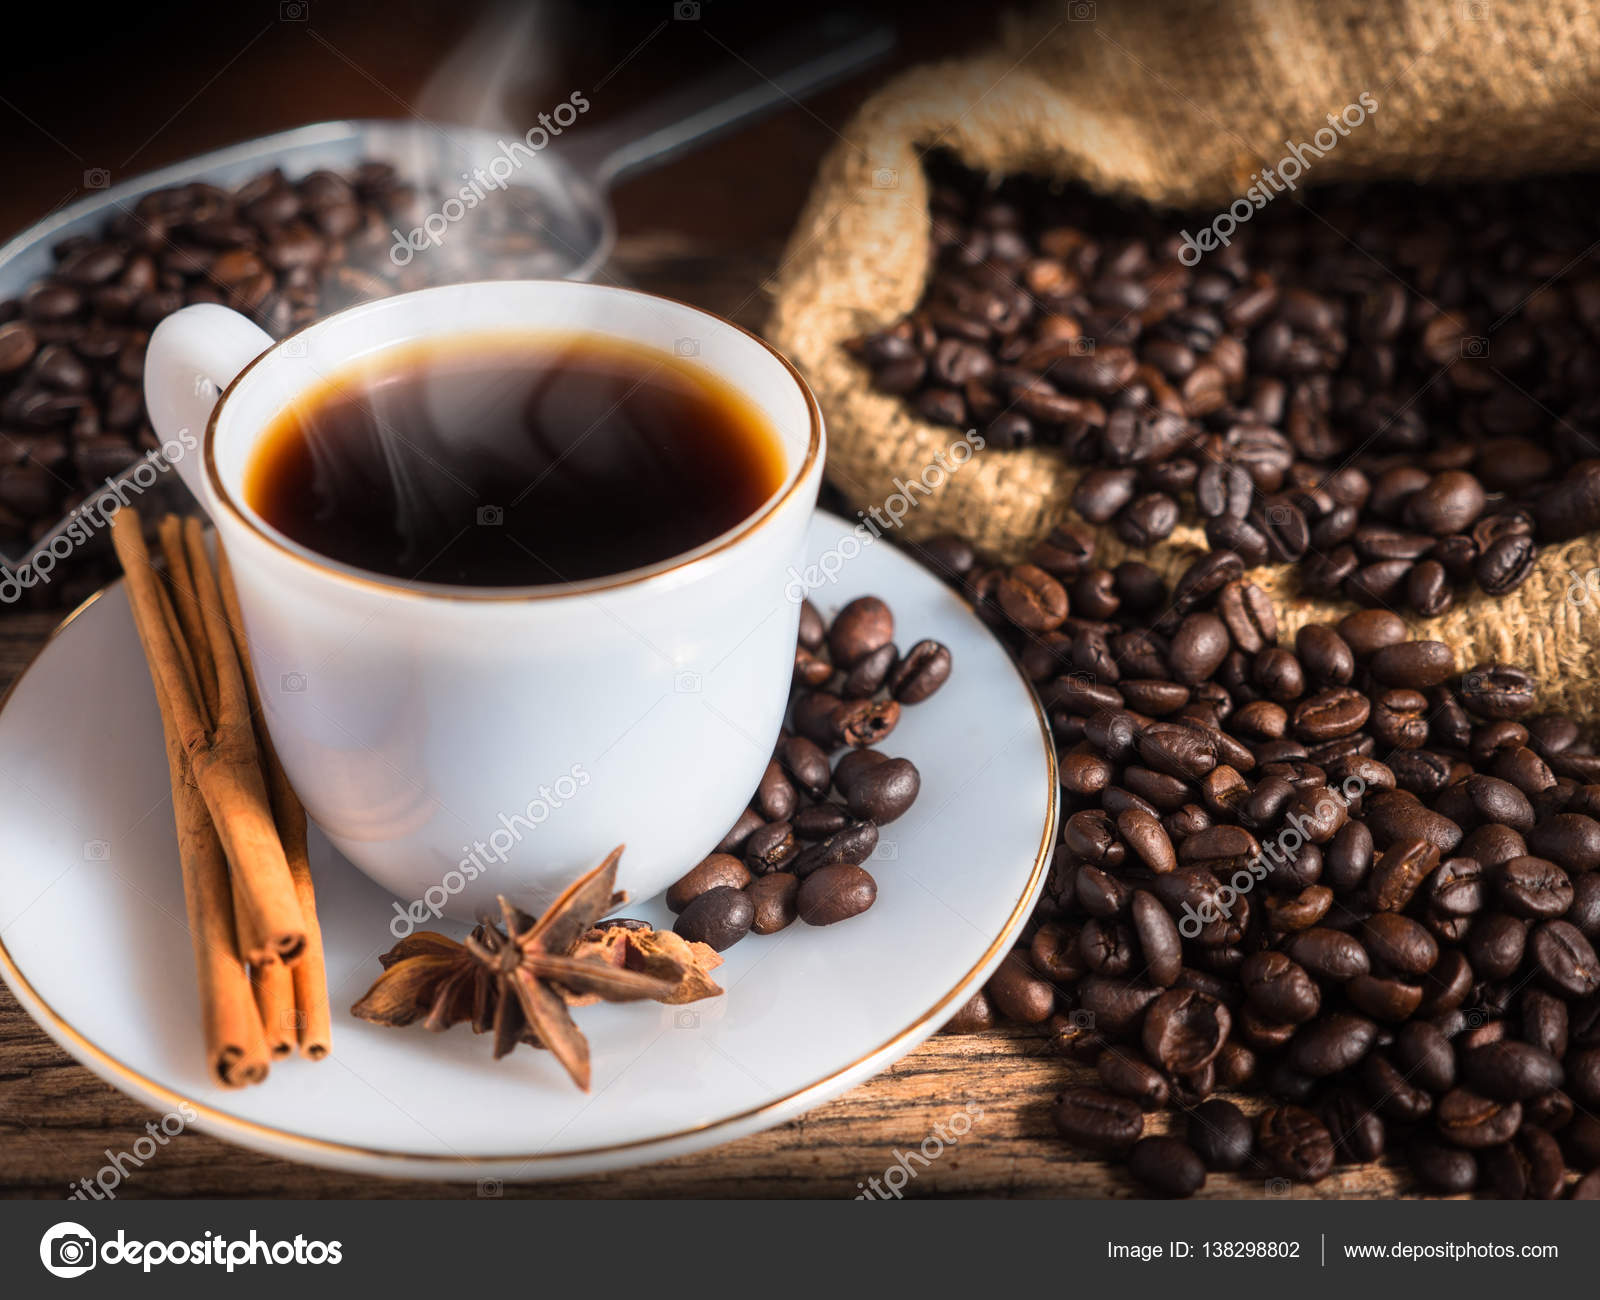 https://st3.depositphotos.com/1689803/13829/i/1600/depositphotos_138298802-stock-photo-hot-coffee-mug-with-cup.jpg